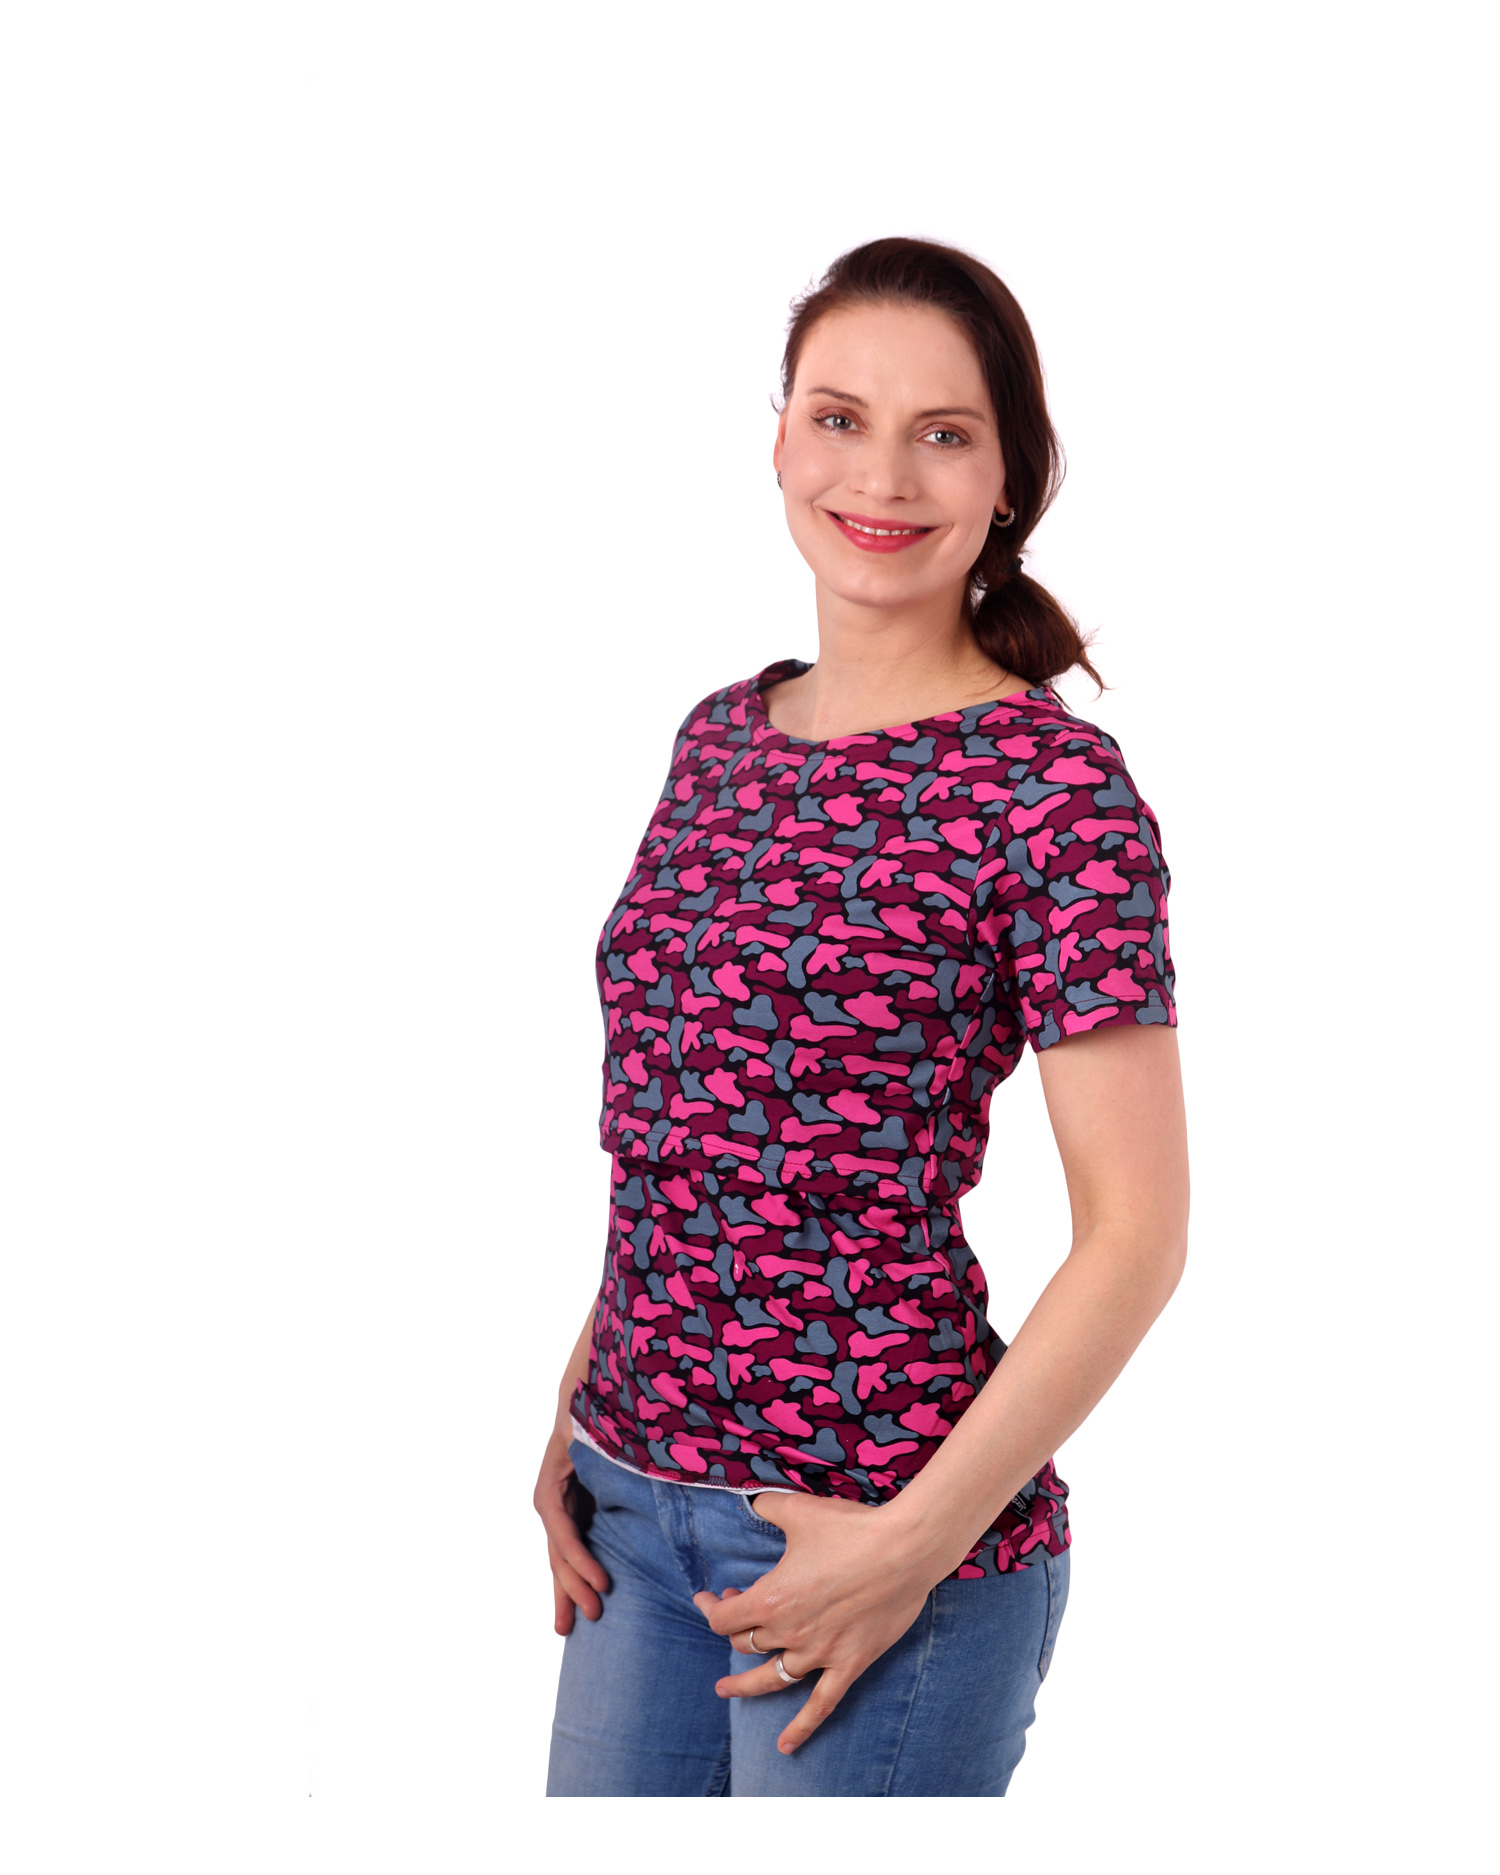 Breast-feeding T-shirt Katerina, short sleeves, green spots on a black L/XL